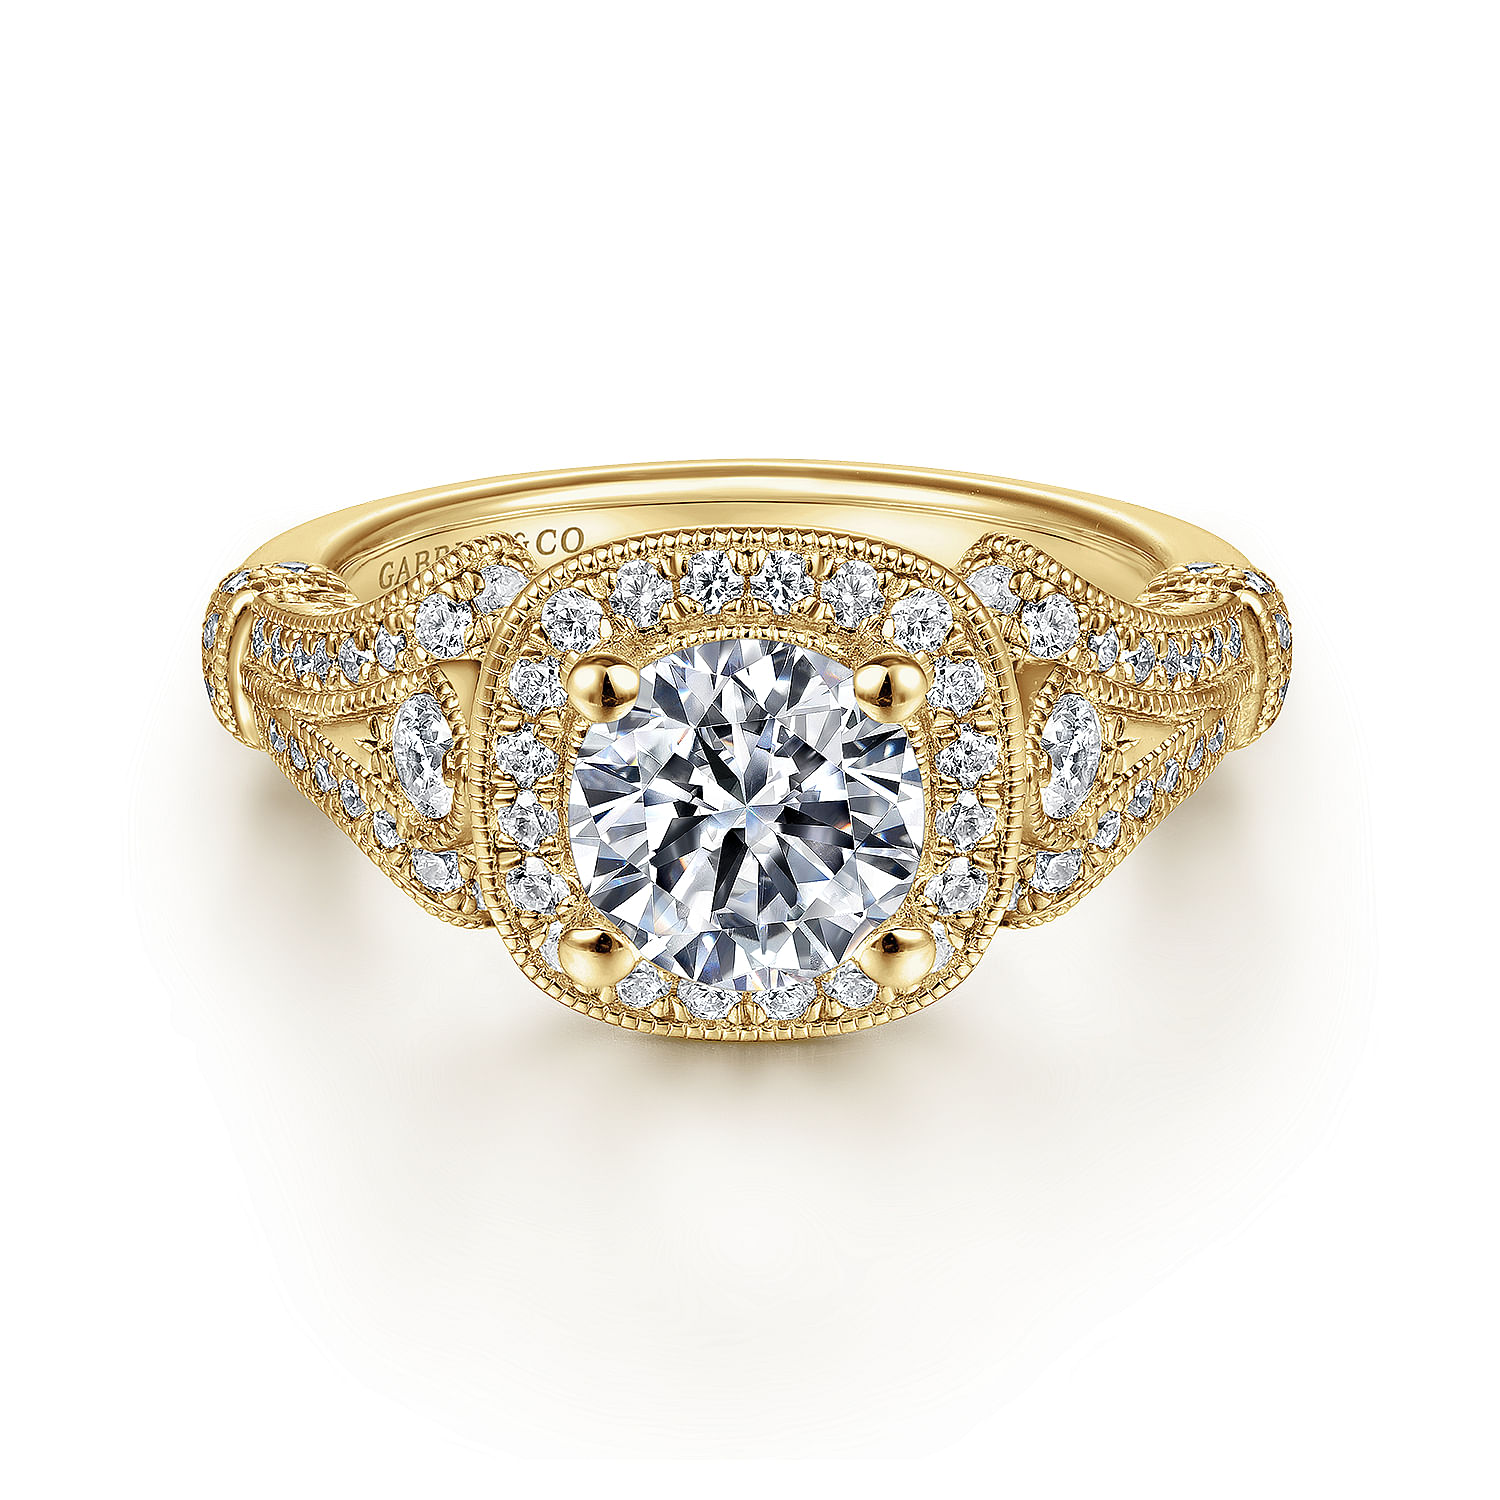 Delilah - Vintage Inspired 14K Yellow Gold Cushion Halo Round Diamond Engagement Ring